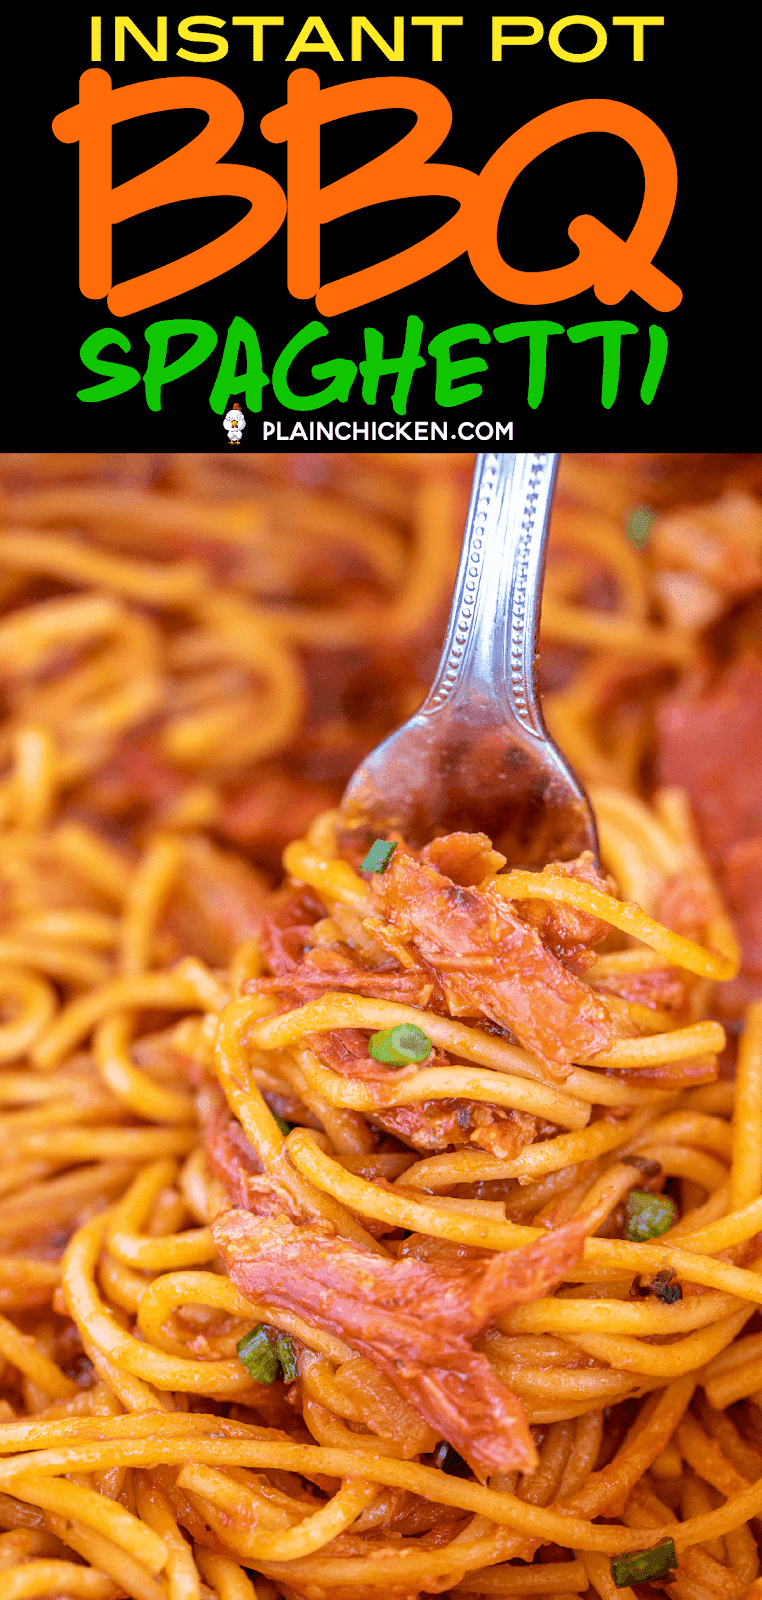 bbq spaghetti on a fork